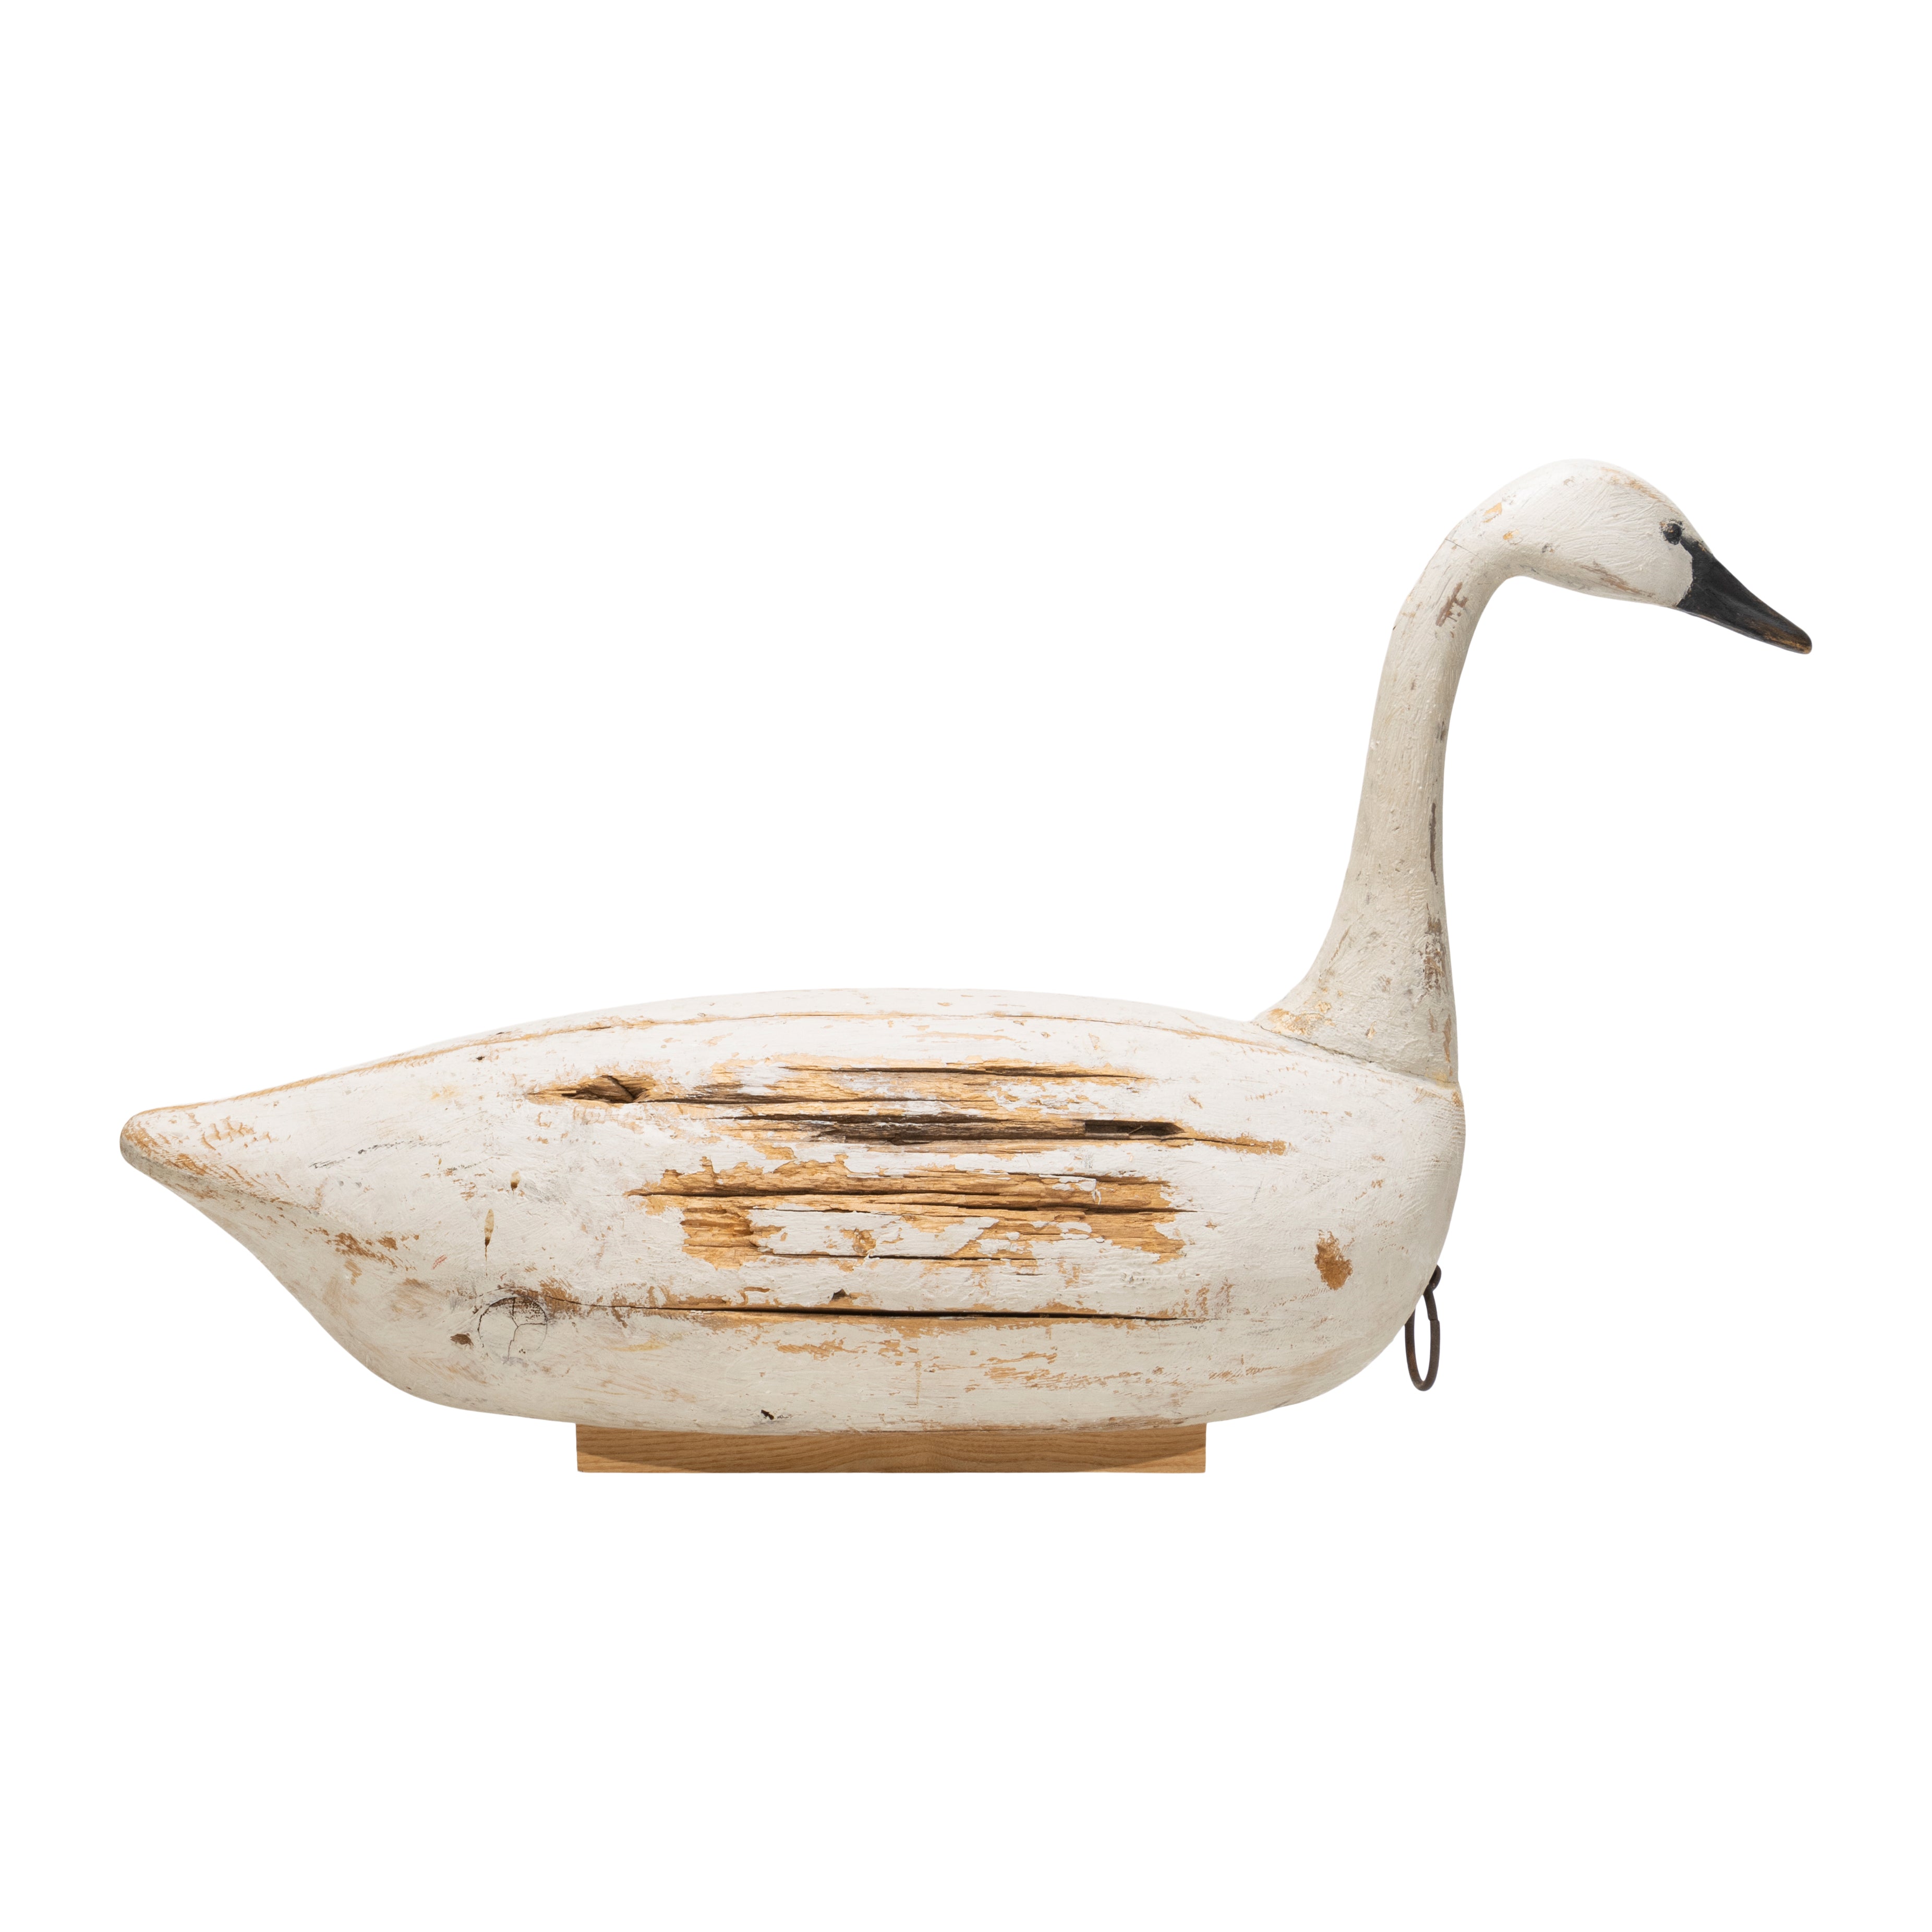 Swan Decoy by Reggie Birch